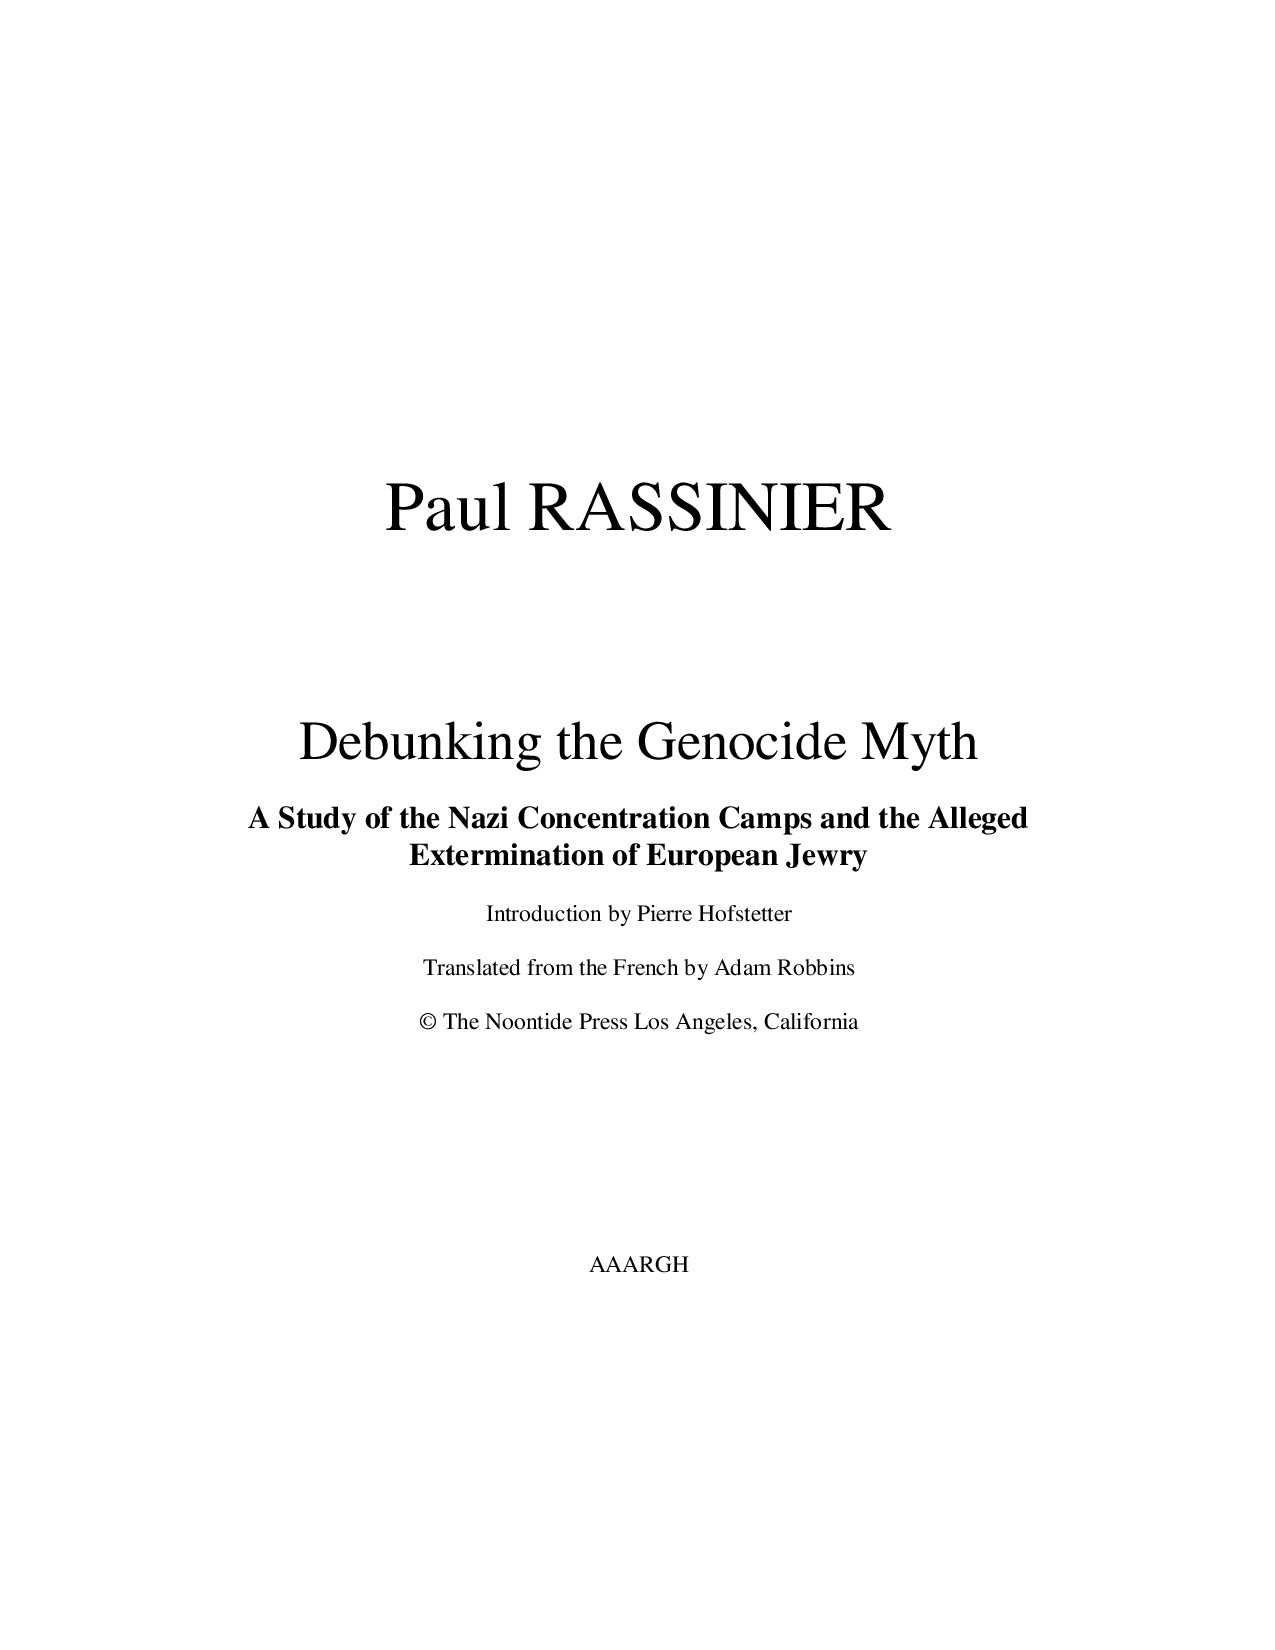 Debunking the Genocide Myth